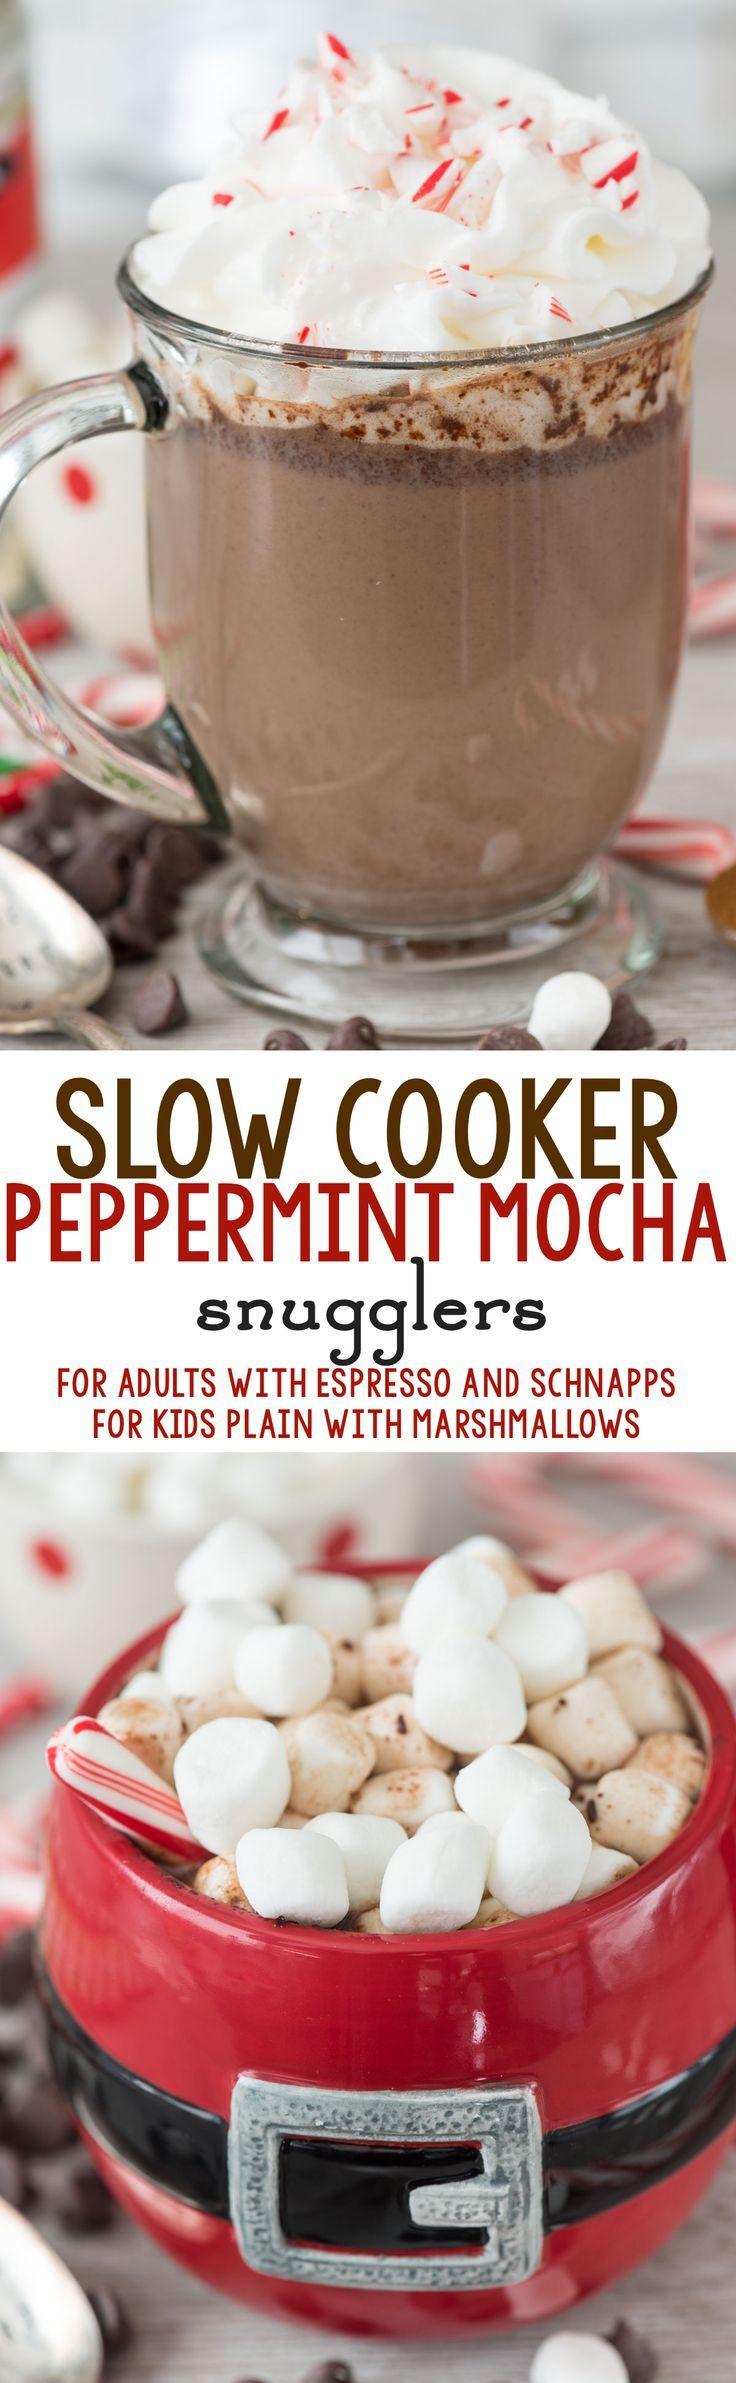 زفاف - Slow Cooker Peppermint Mocha Snugglers